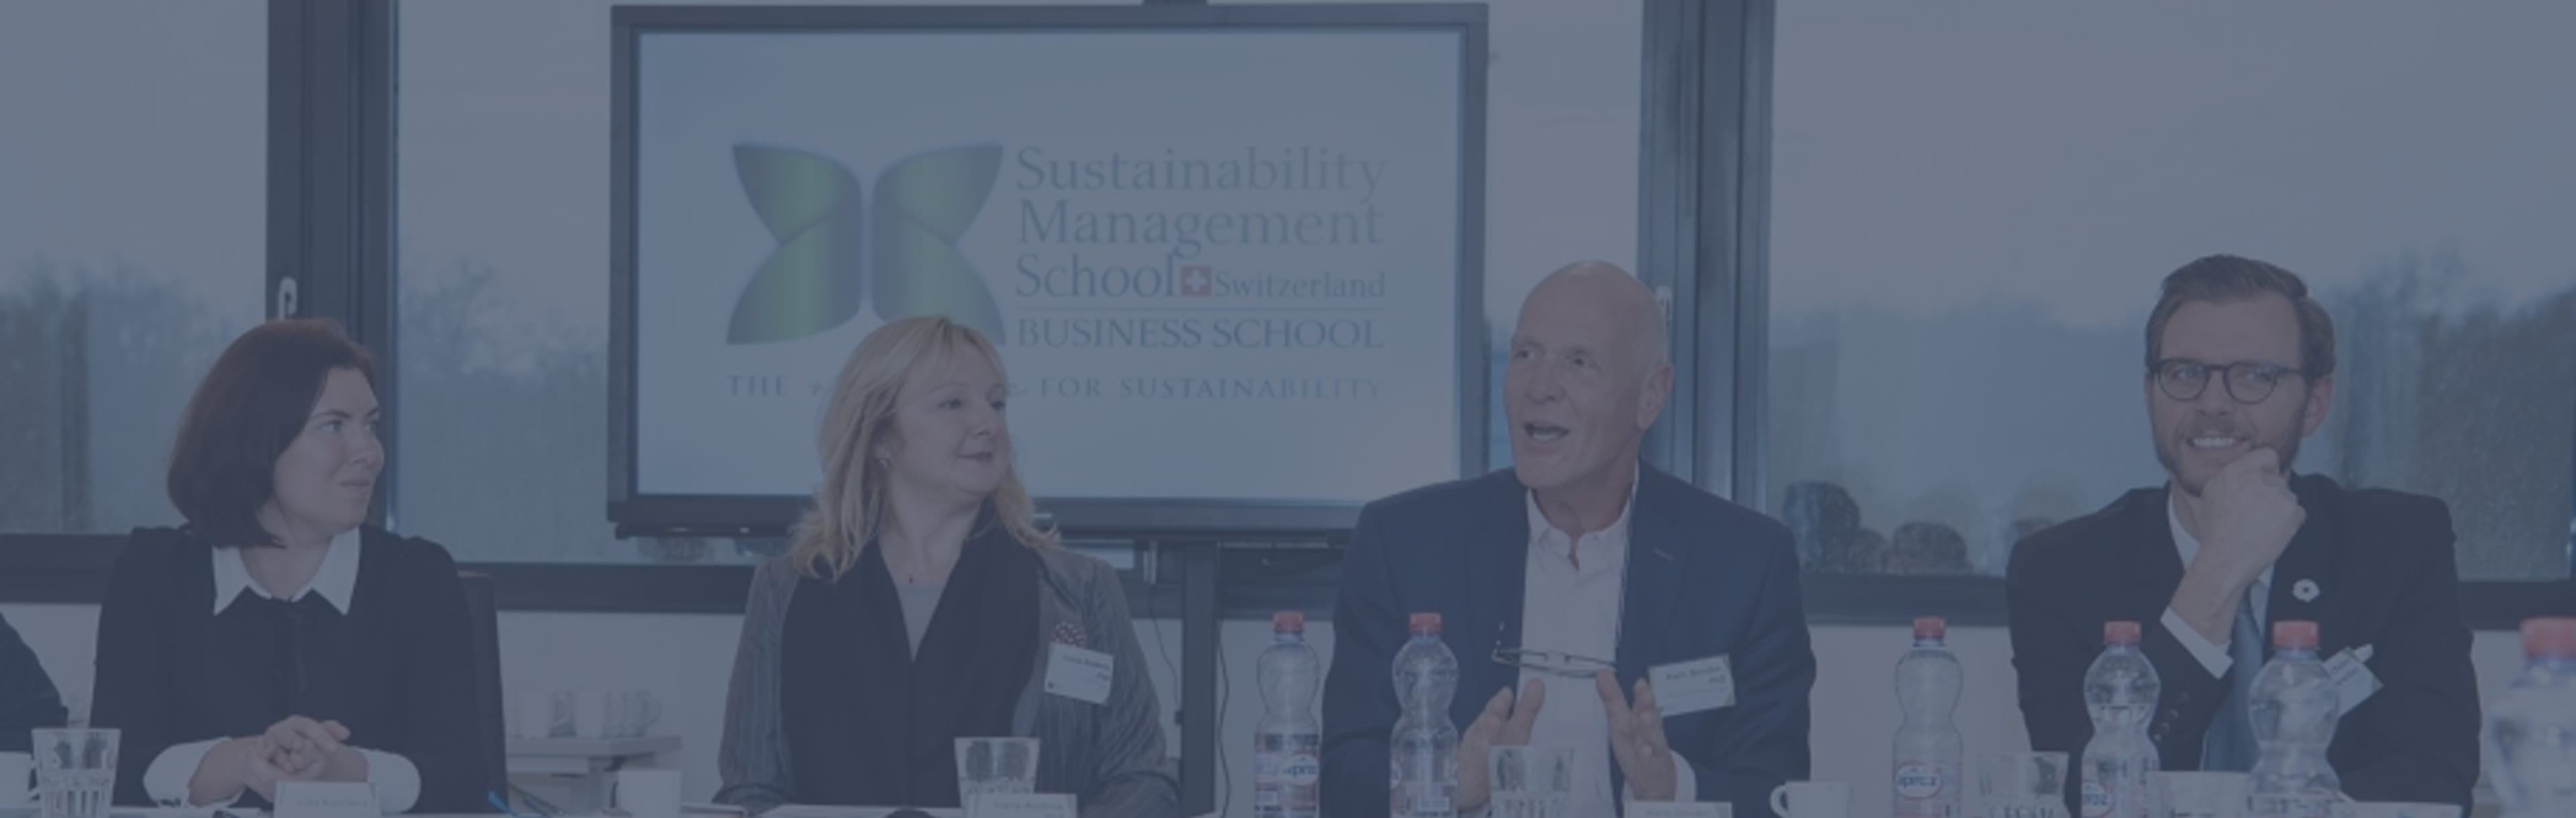 Sustainability Management School MBA in Sustainable Hospitality Management